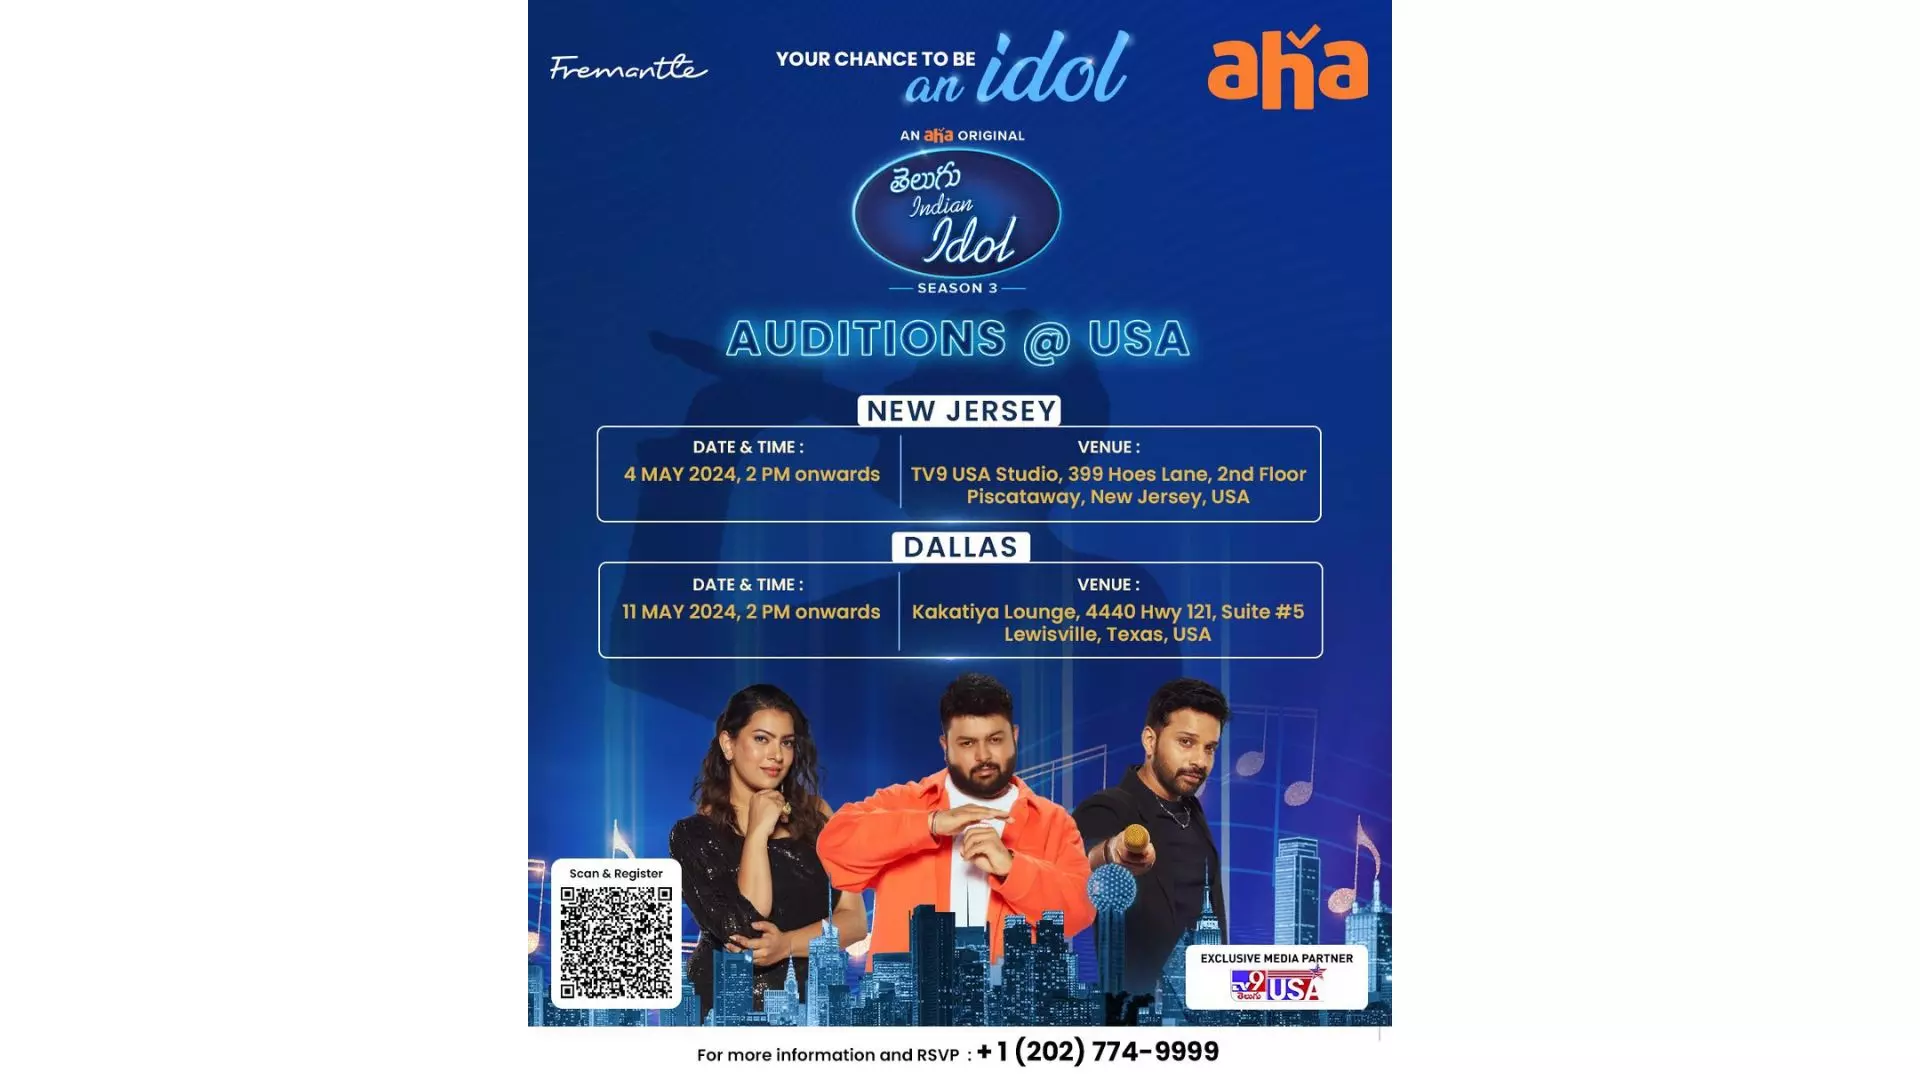 Aha Telugu Indian Idol Auditions Date in US